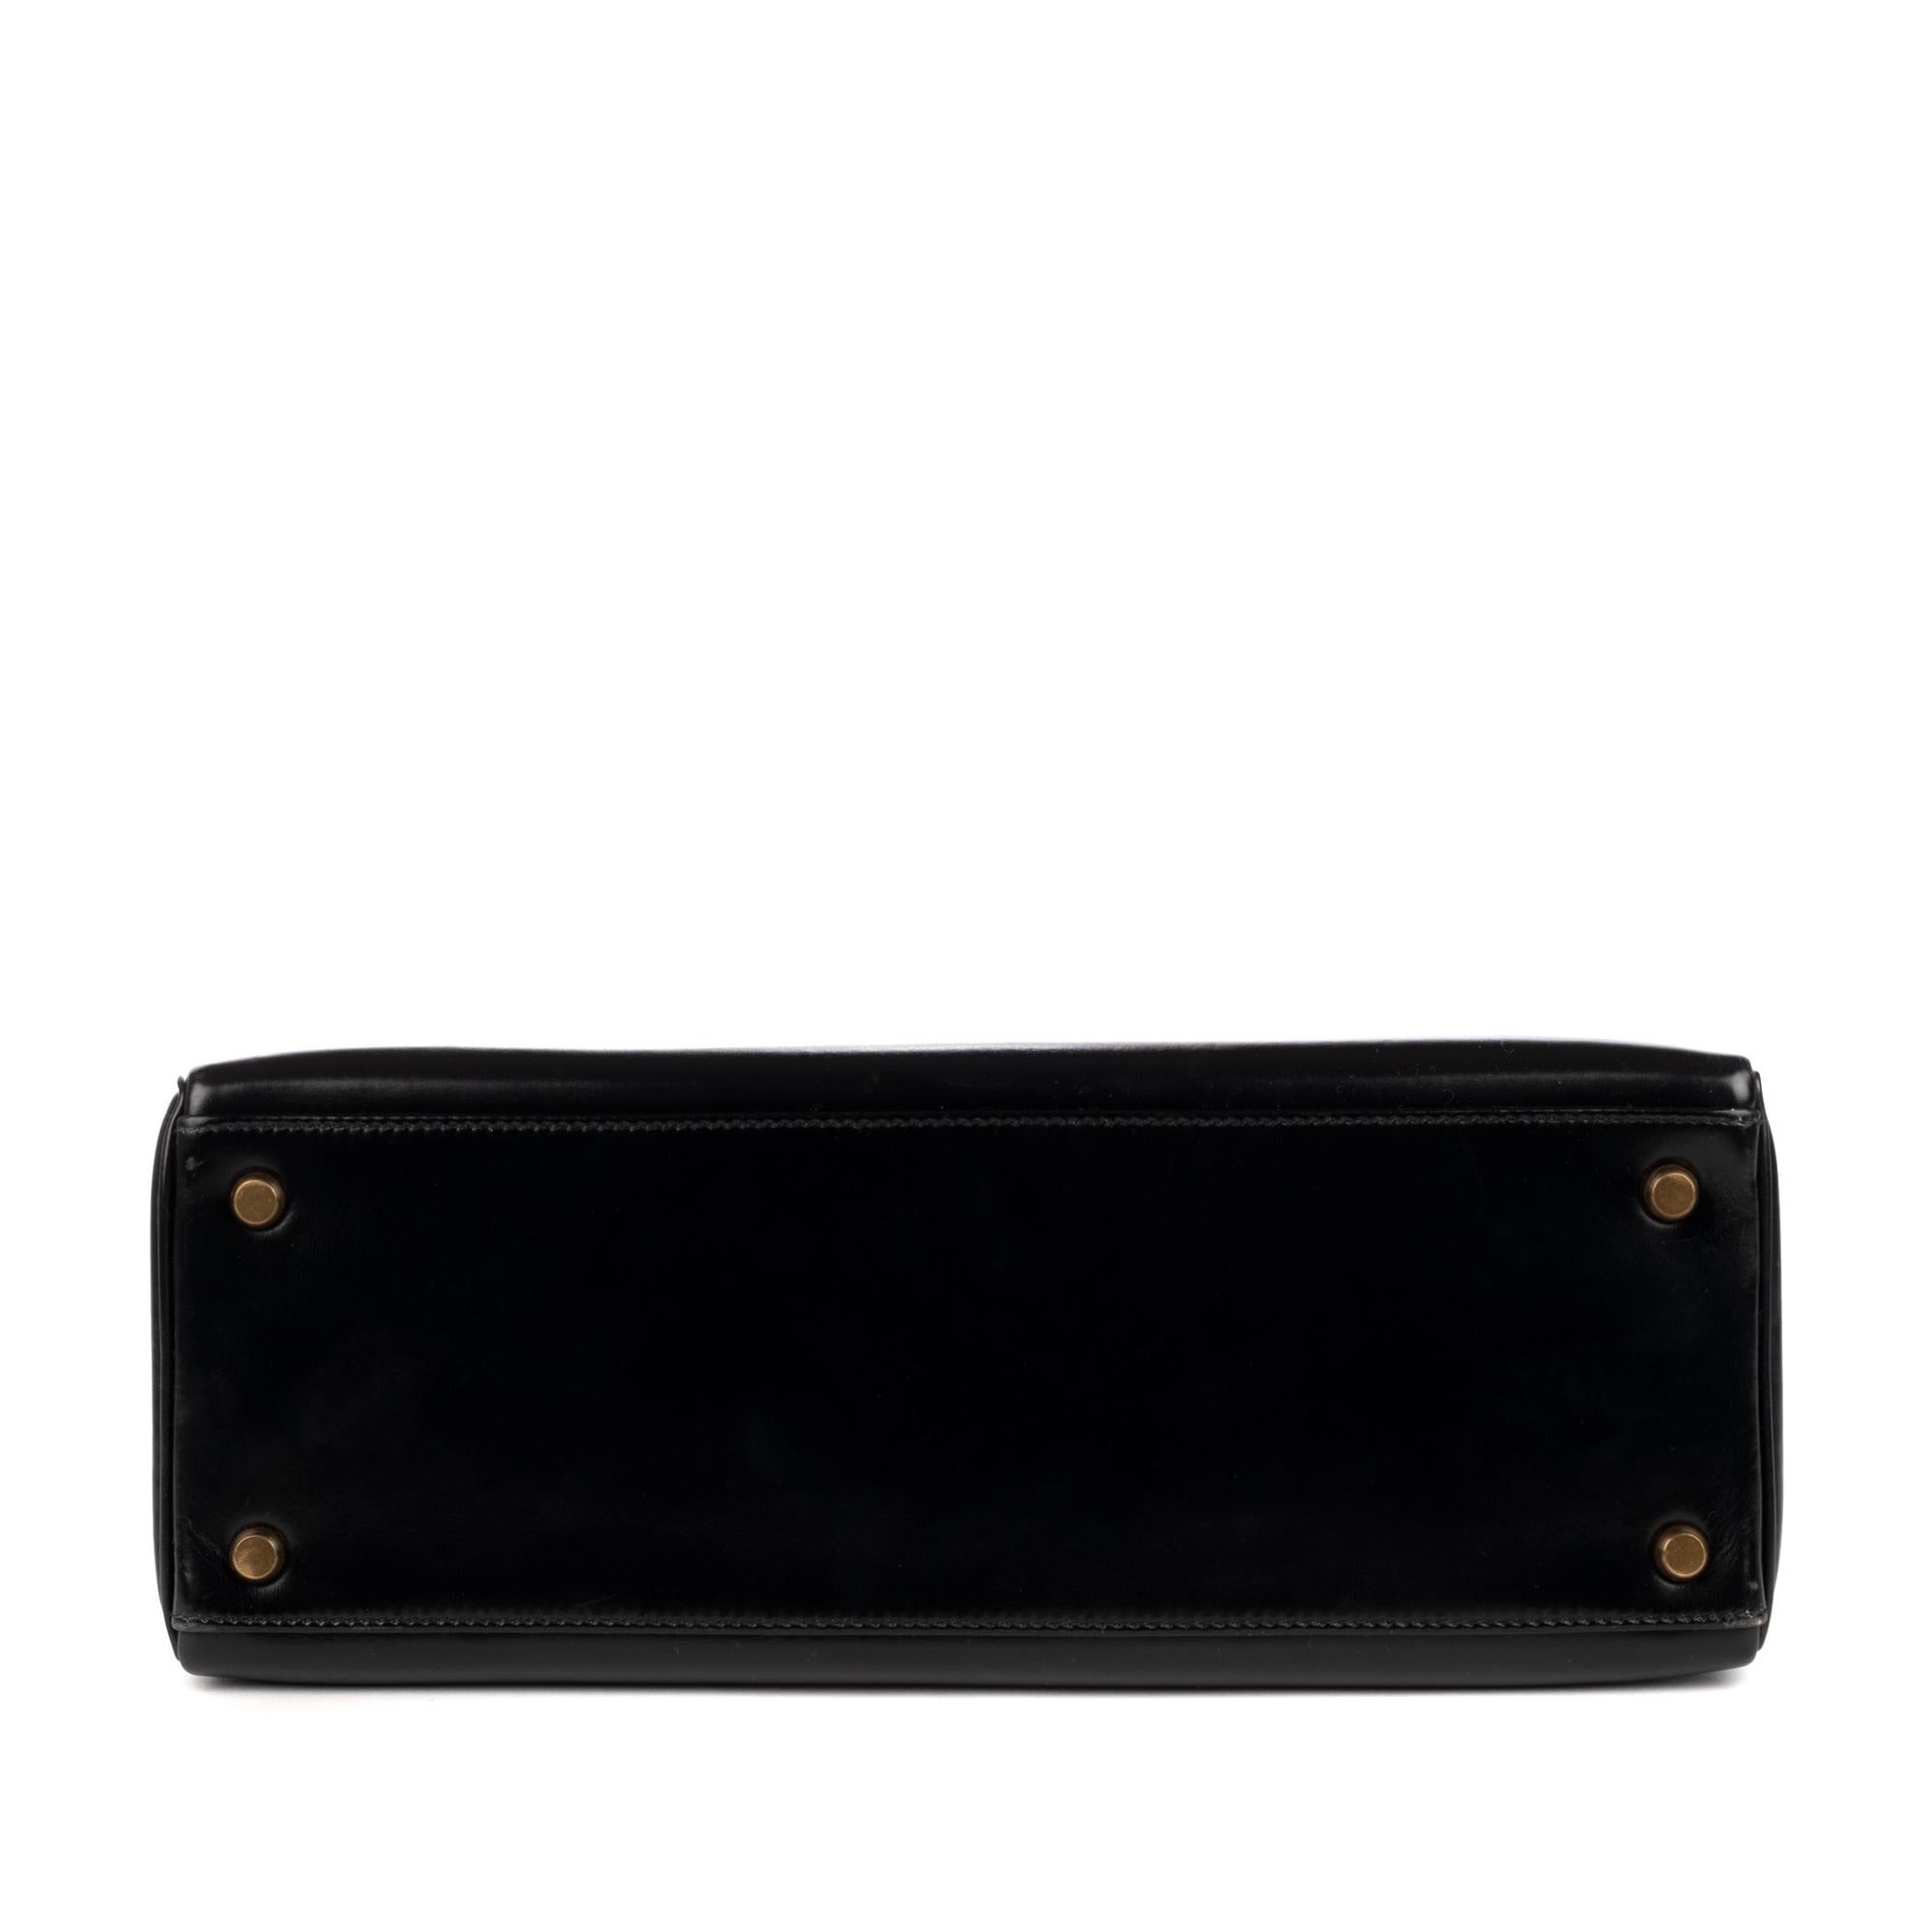 Hermes Kelly 32cm Black Box Leather Handbag 4